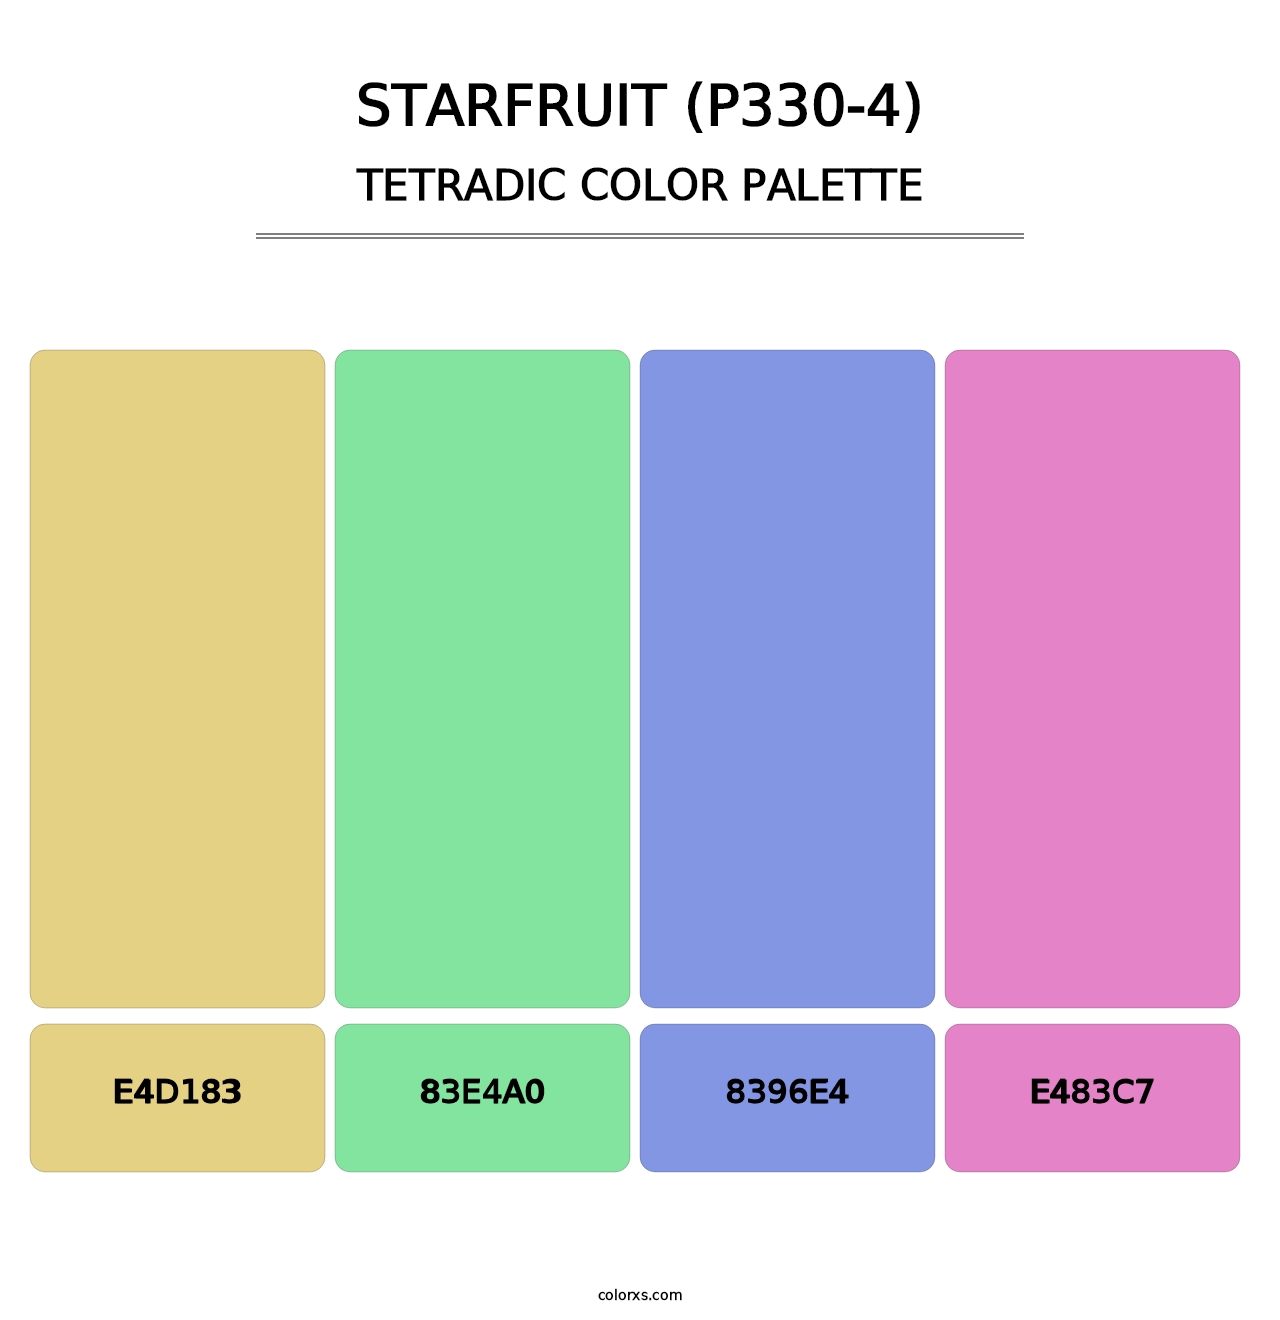 Starfruit (P330-4) - Tetradic Color Palette